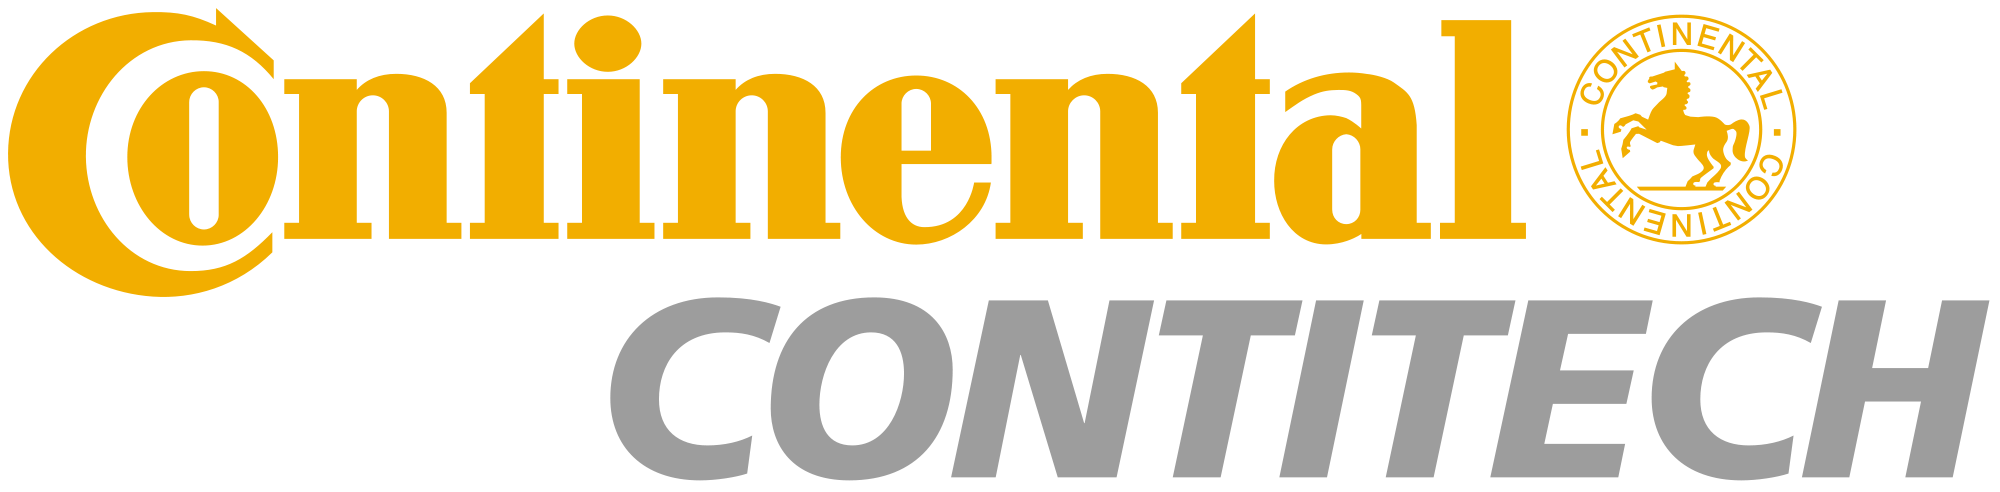 ContiTech-logo.png